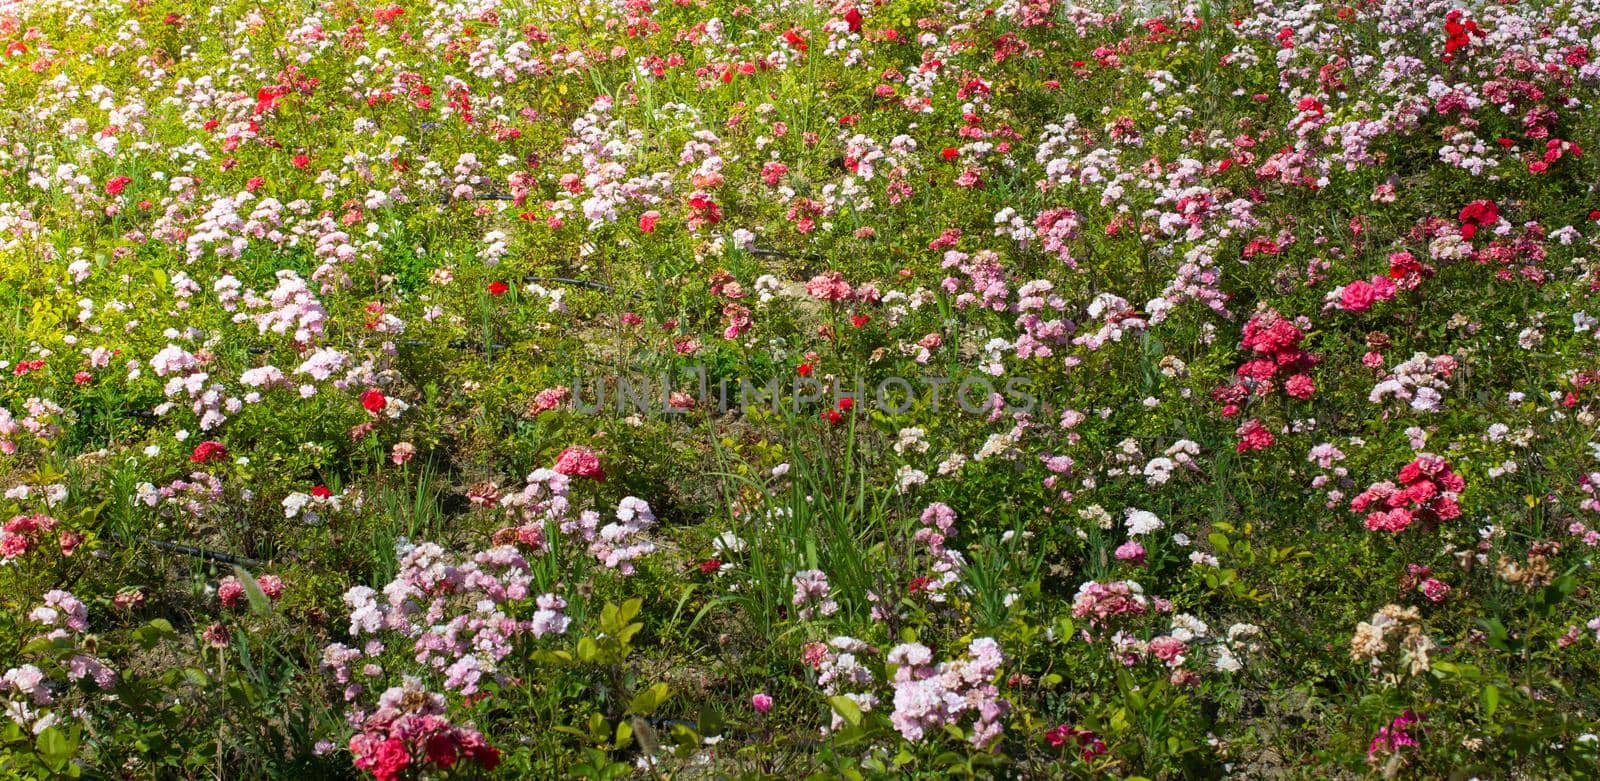 Botanical Garden bright floral gardens colors in full bloom